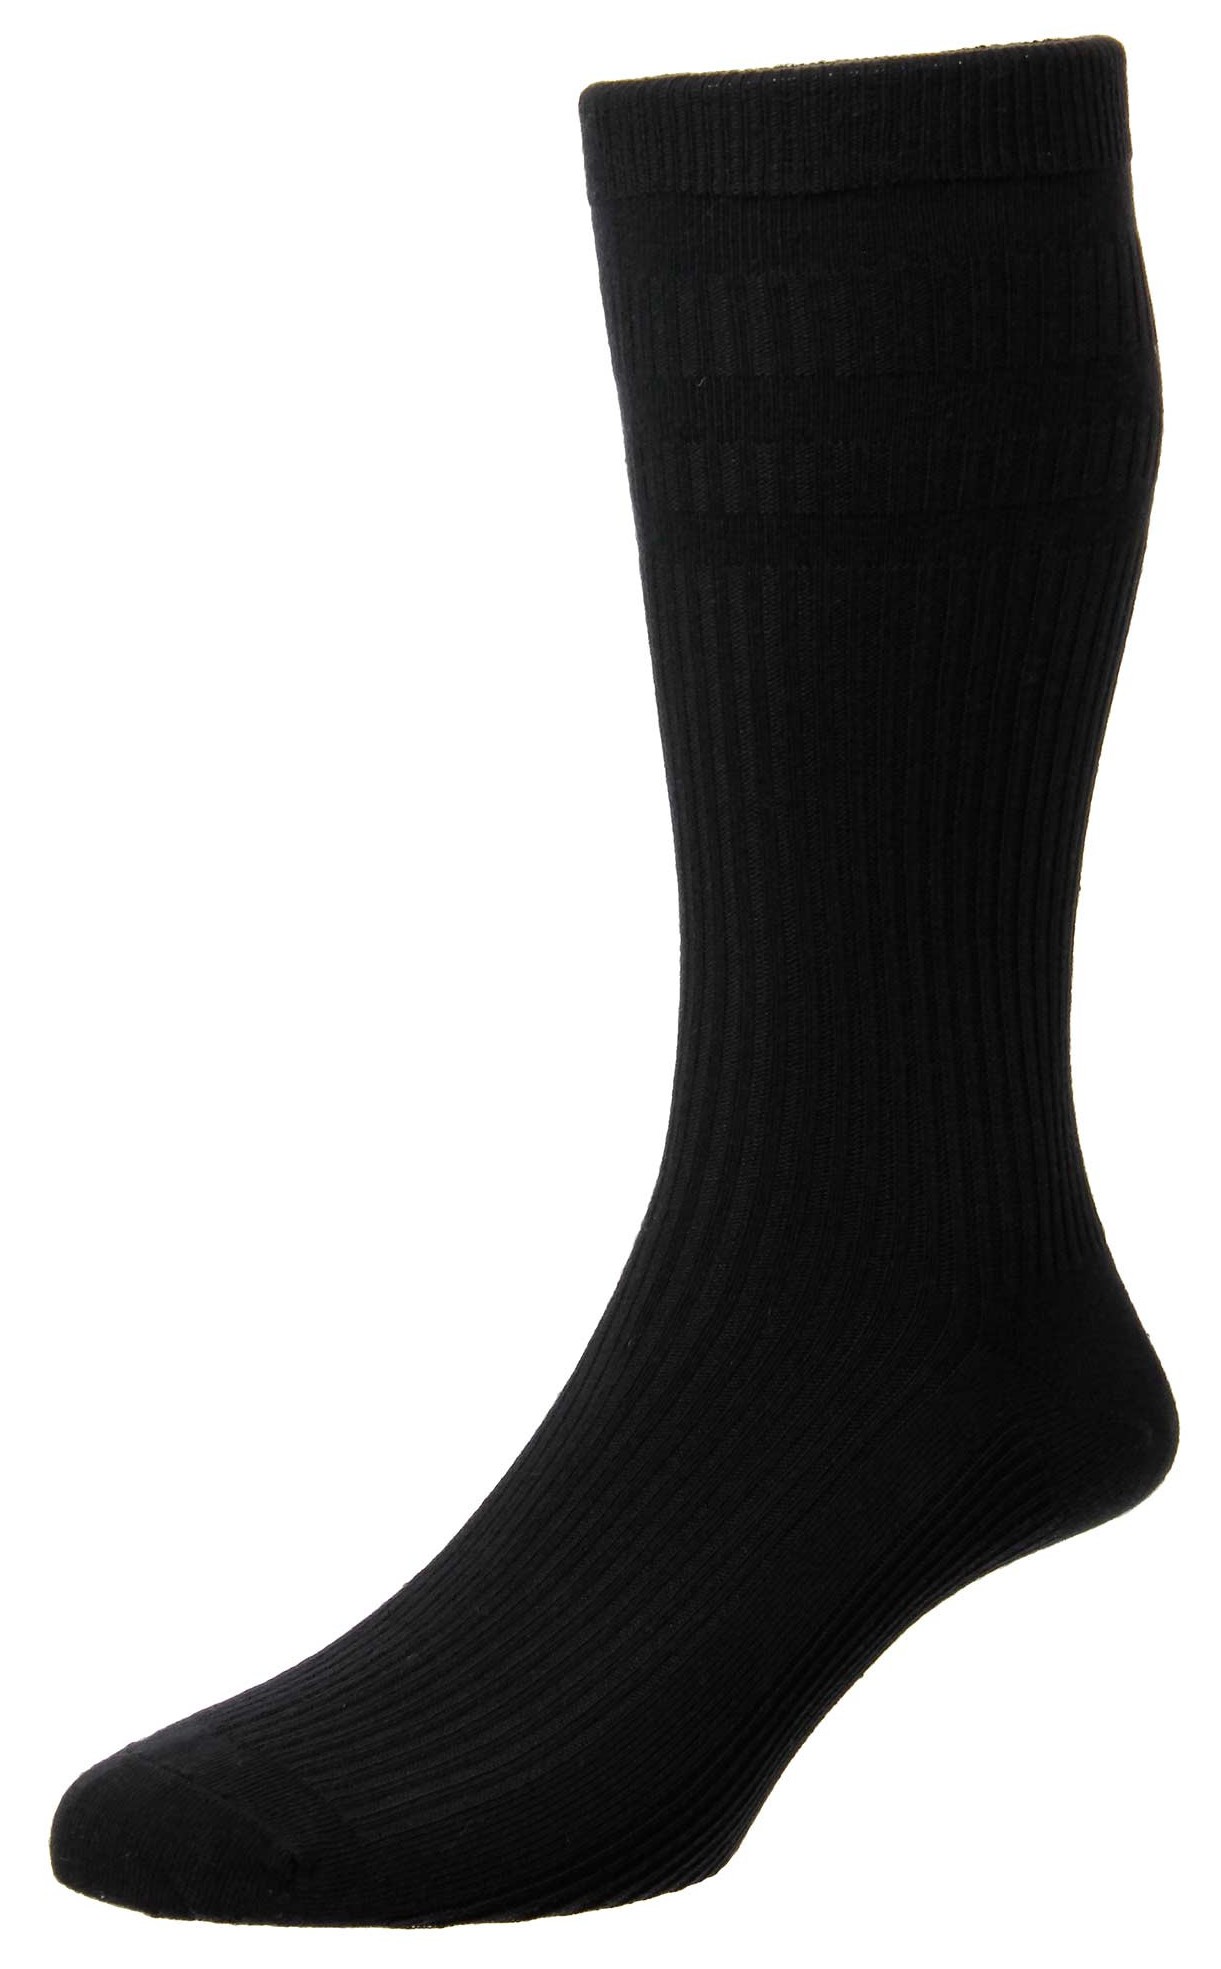 HJ191 Softop Socks Black size 6-11